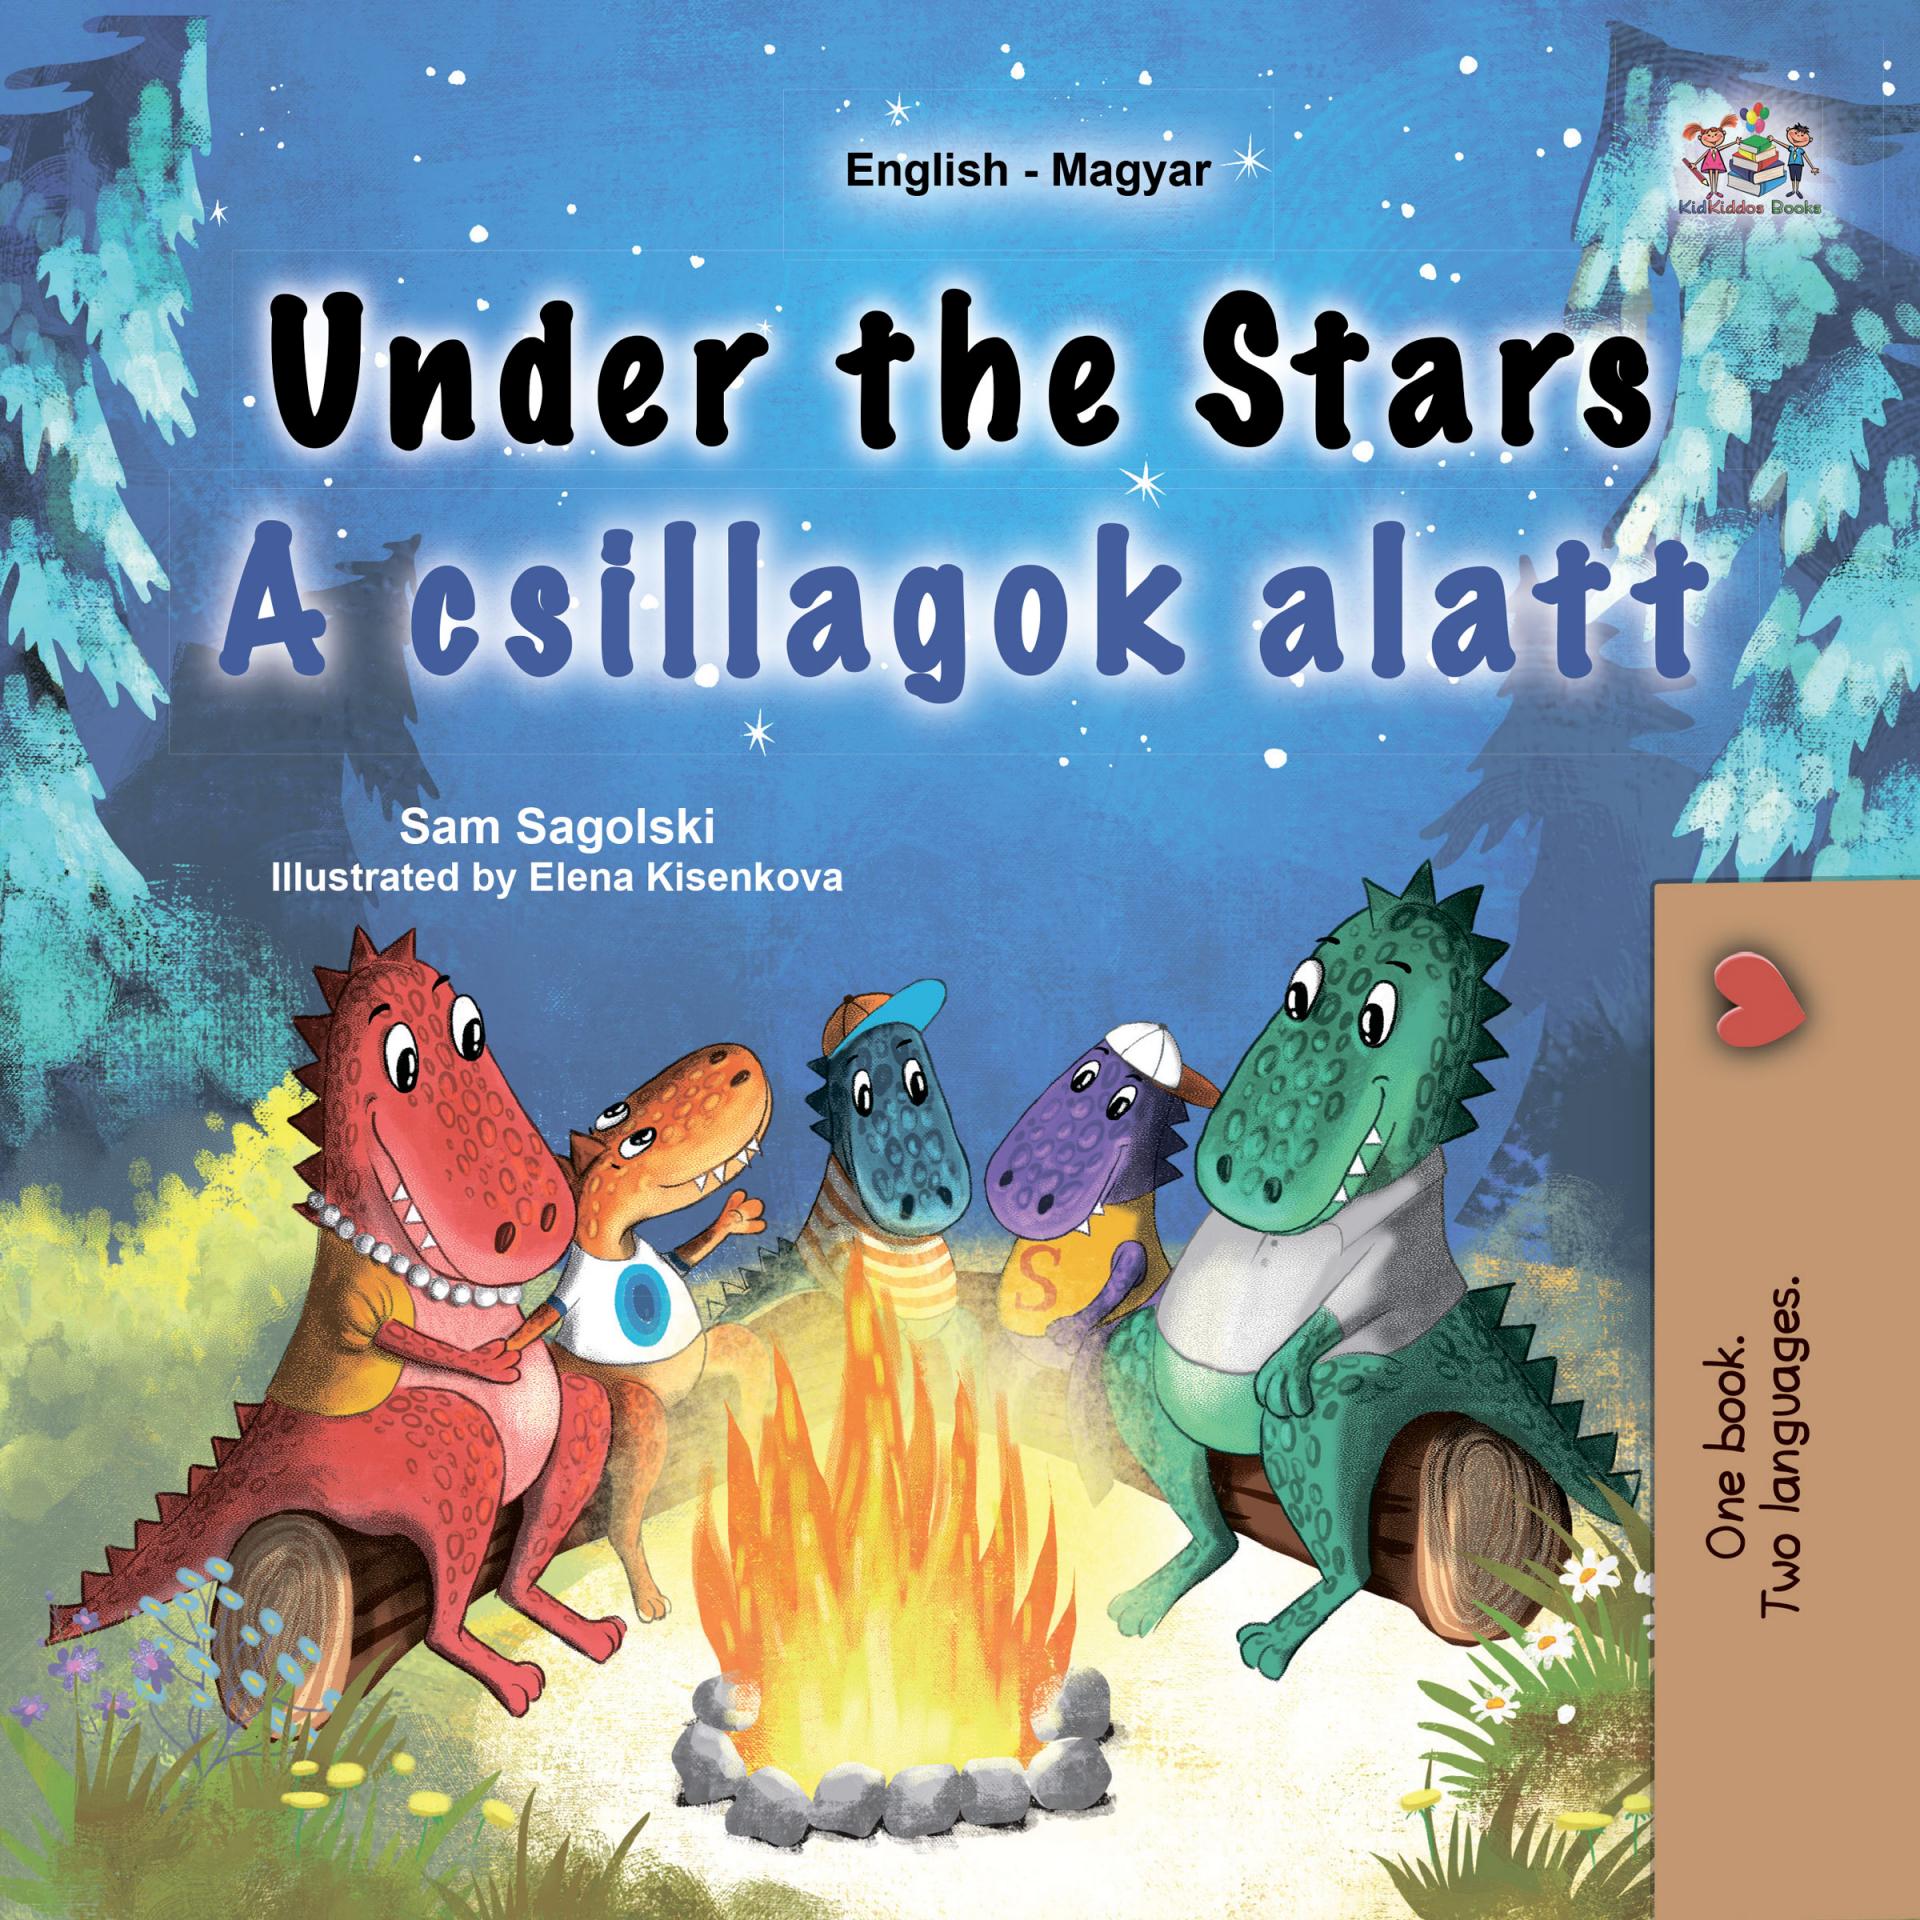 Under the Stars A csillagok alatt (English Hungarian Bilingual Collection)